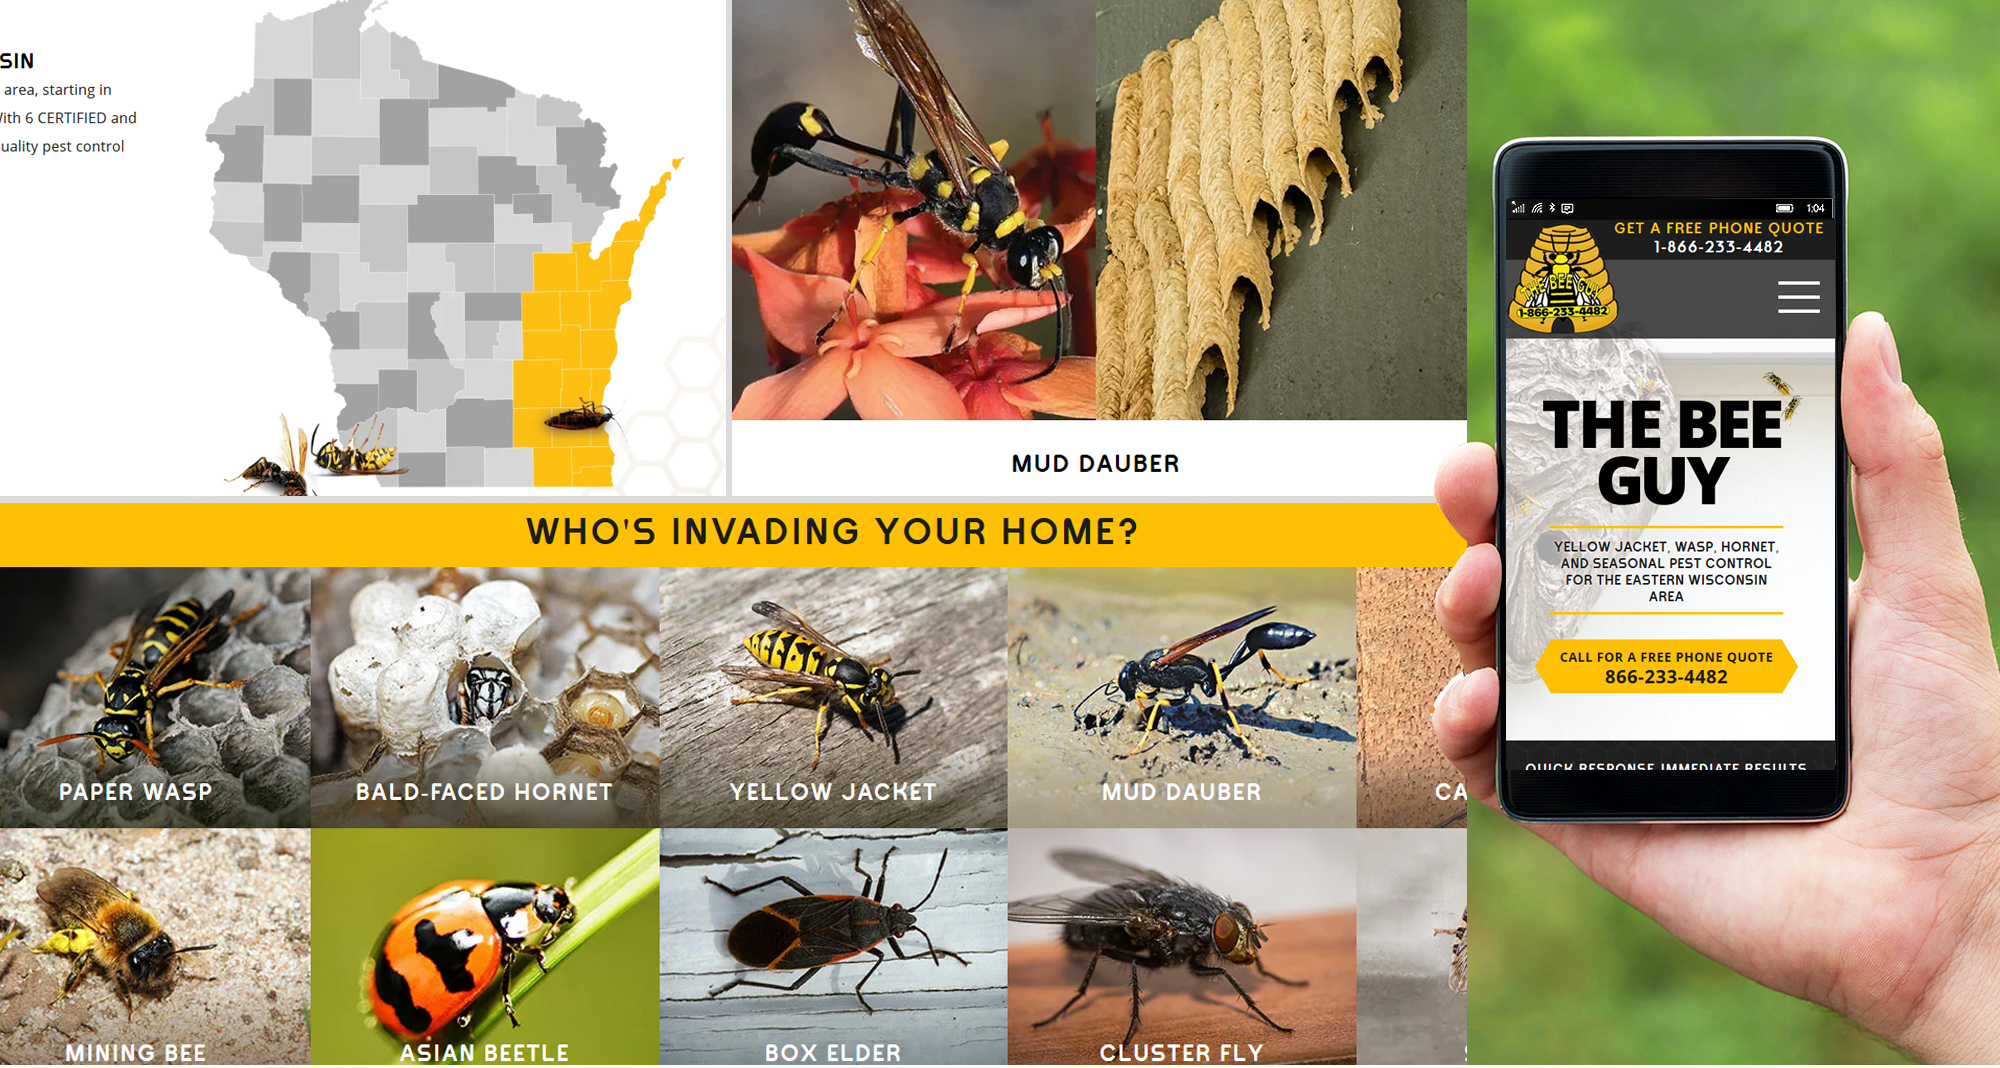 Milwaukee web marketing for The Bee Guy